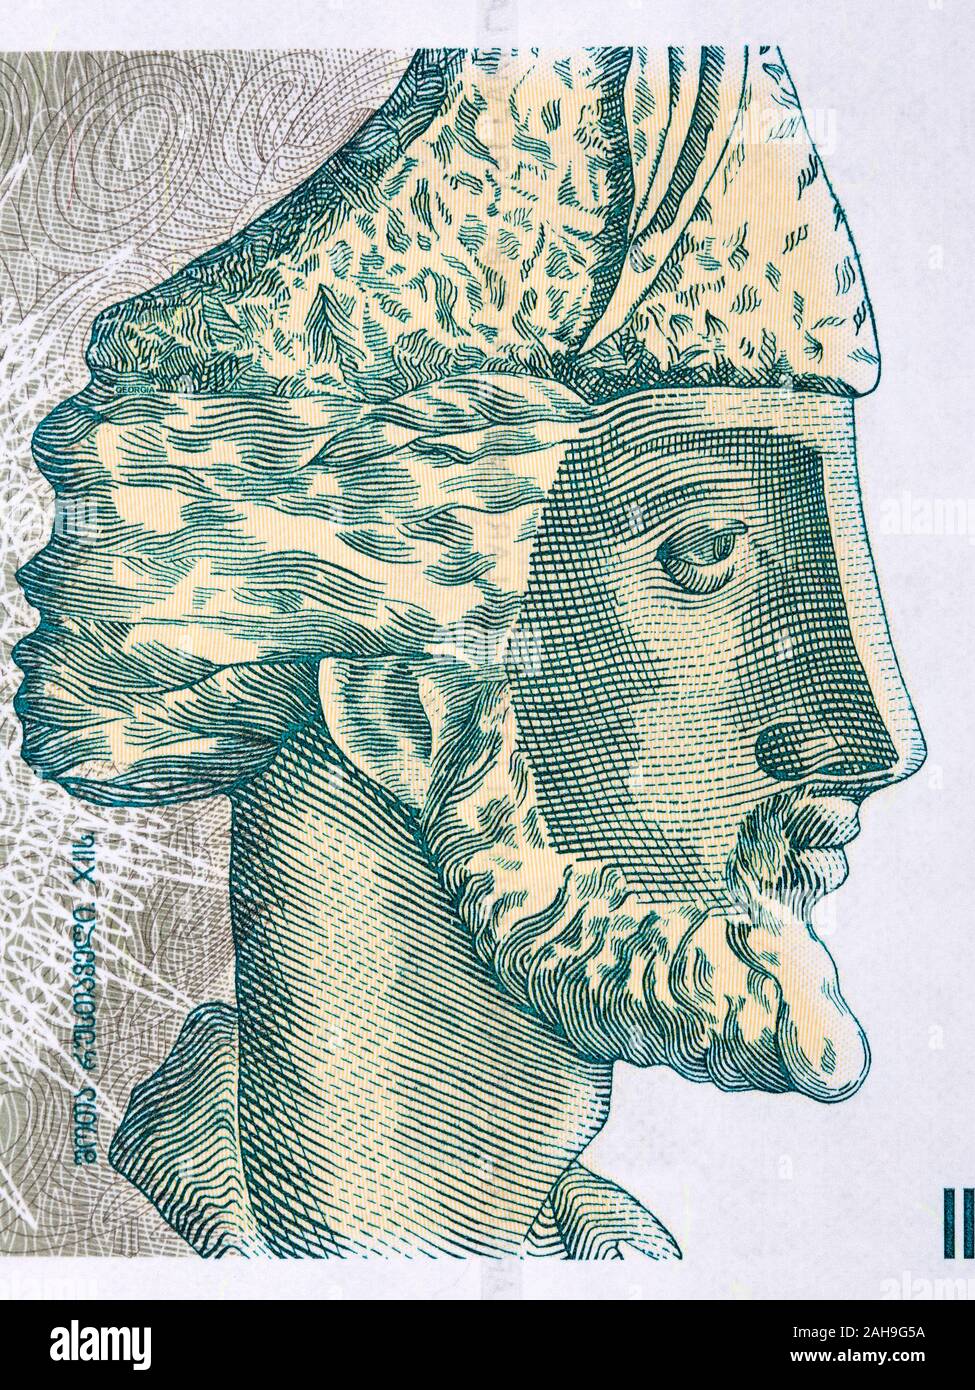 Shota Rustaveli a portrait from Georgian money Stock Photo